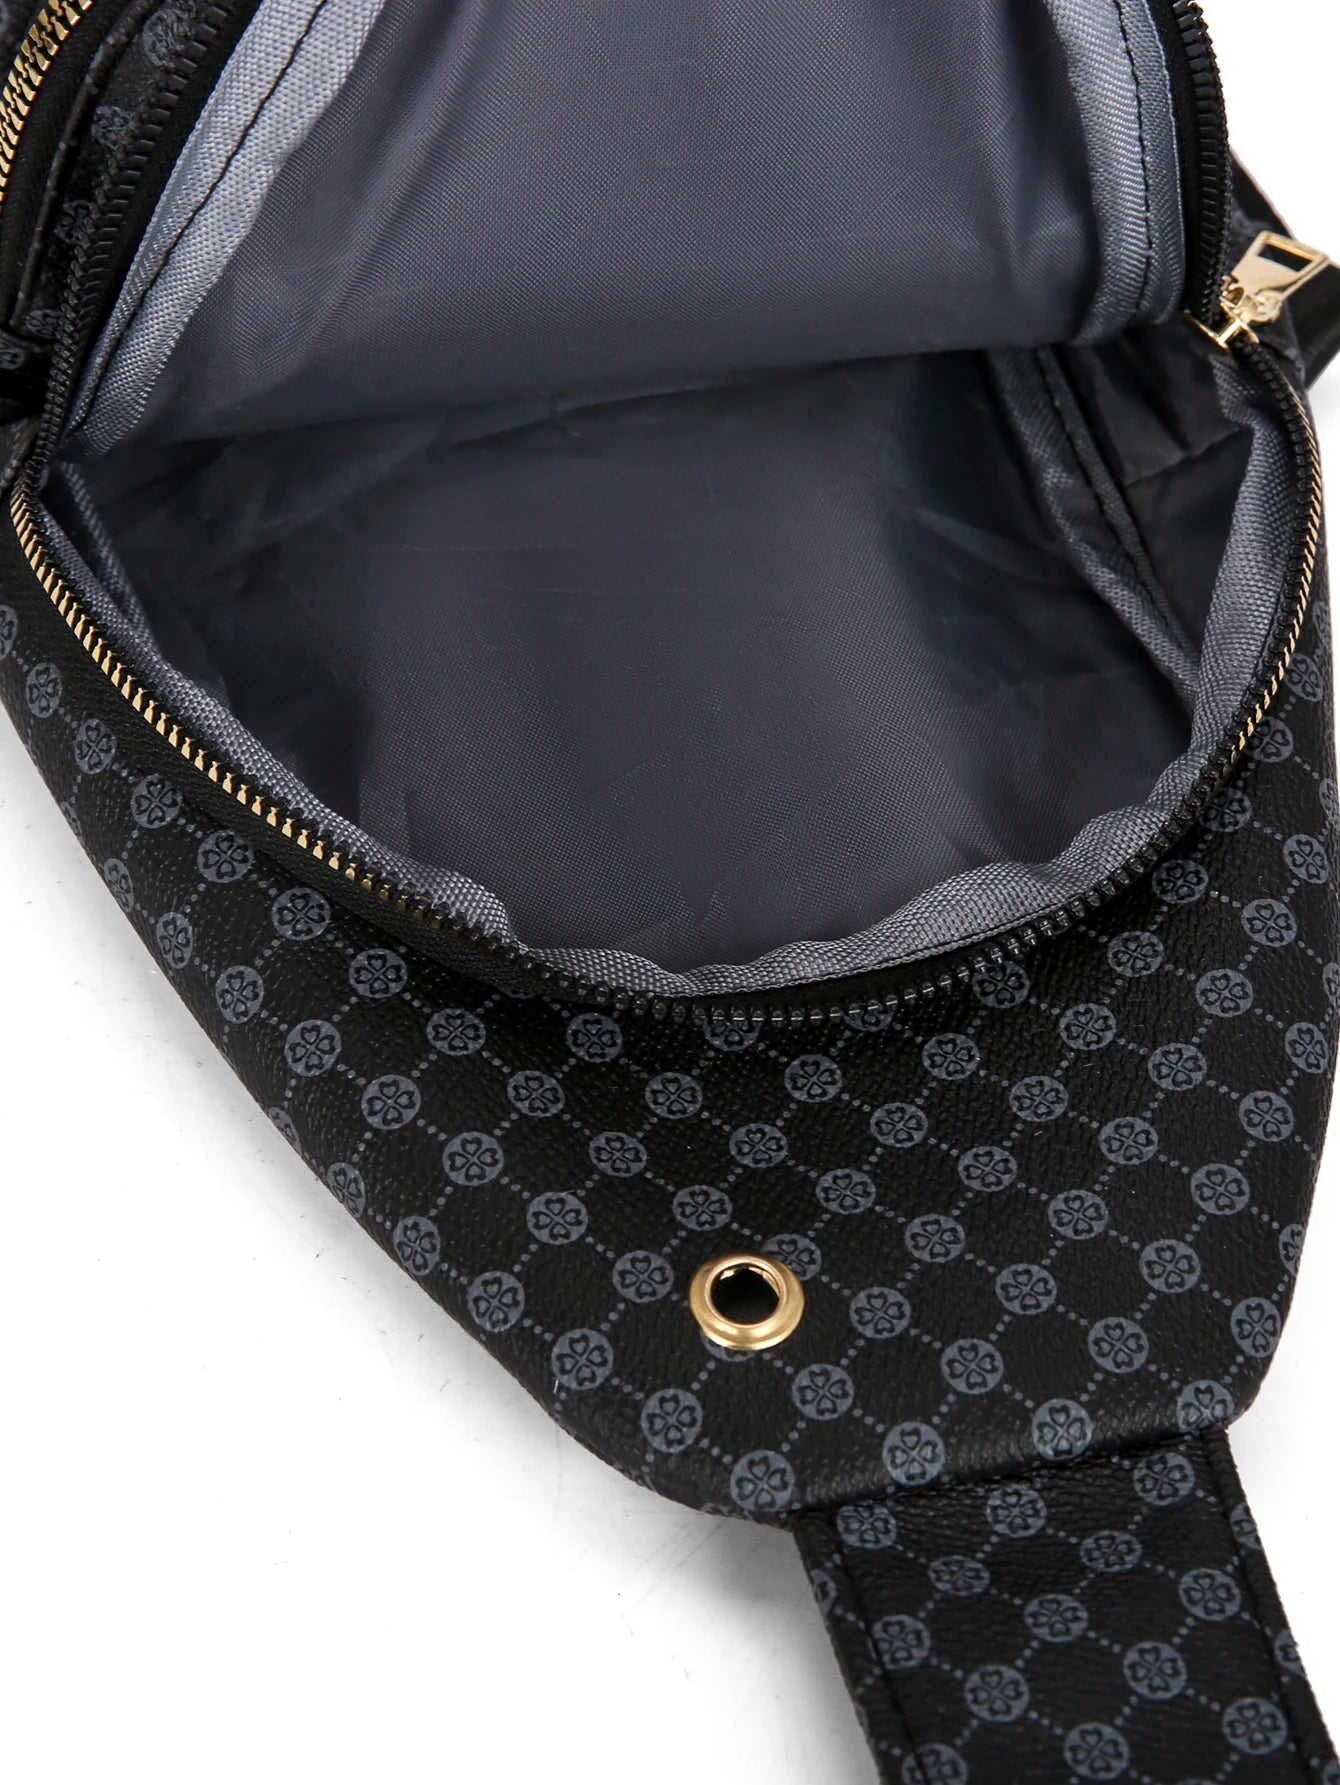 Urban Travel Chest Bag Shoulder Bag Phone Sling Crossbody Bag Trendy Design PU Leather